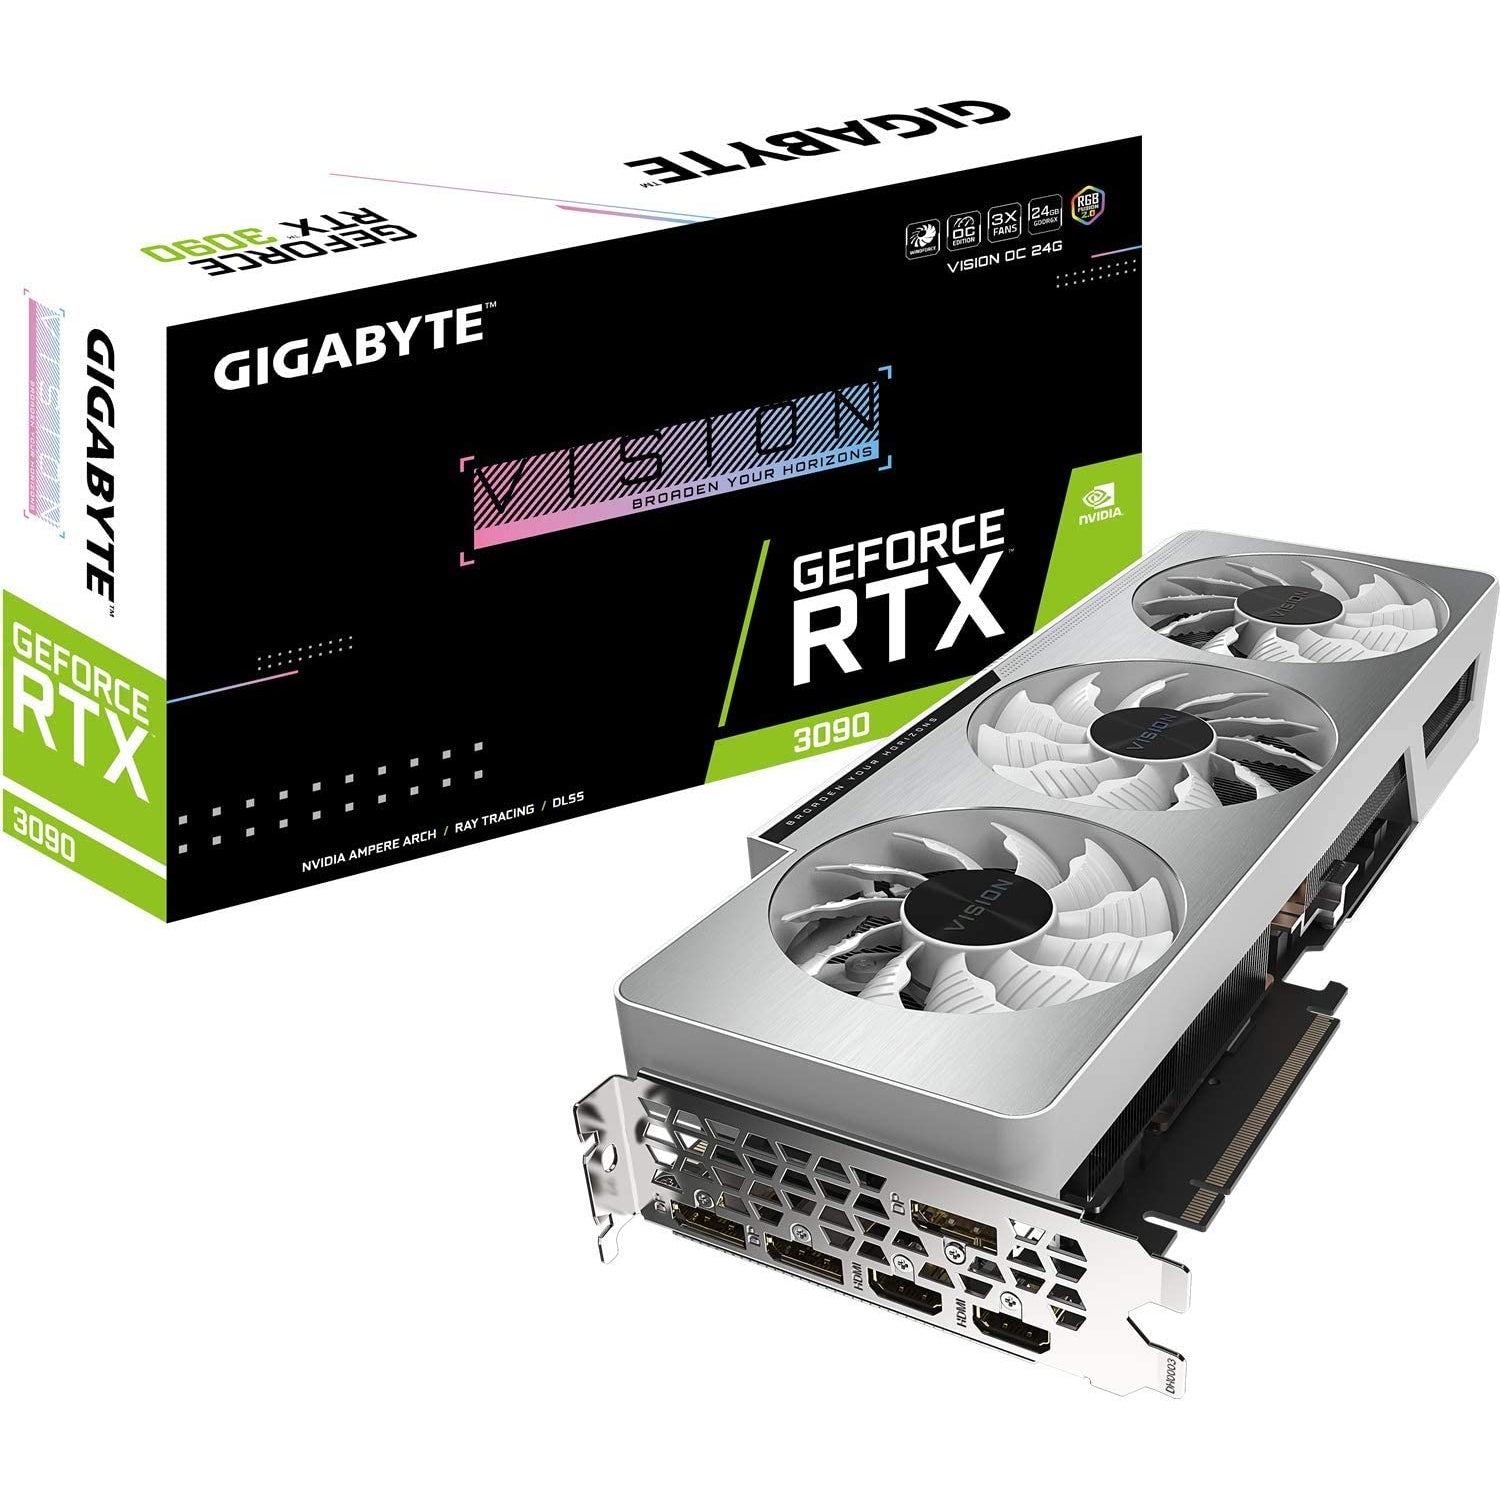 Gigabyte GeForce RTX 3090 VISION OC 24GB Graphics Card